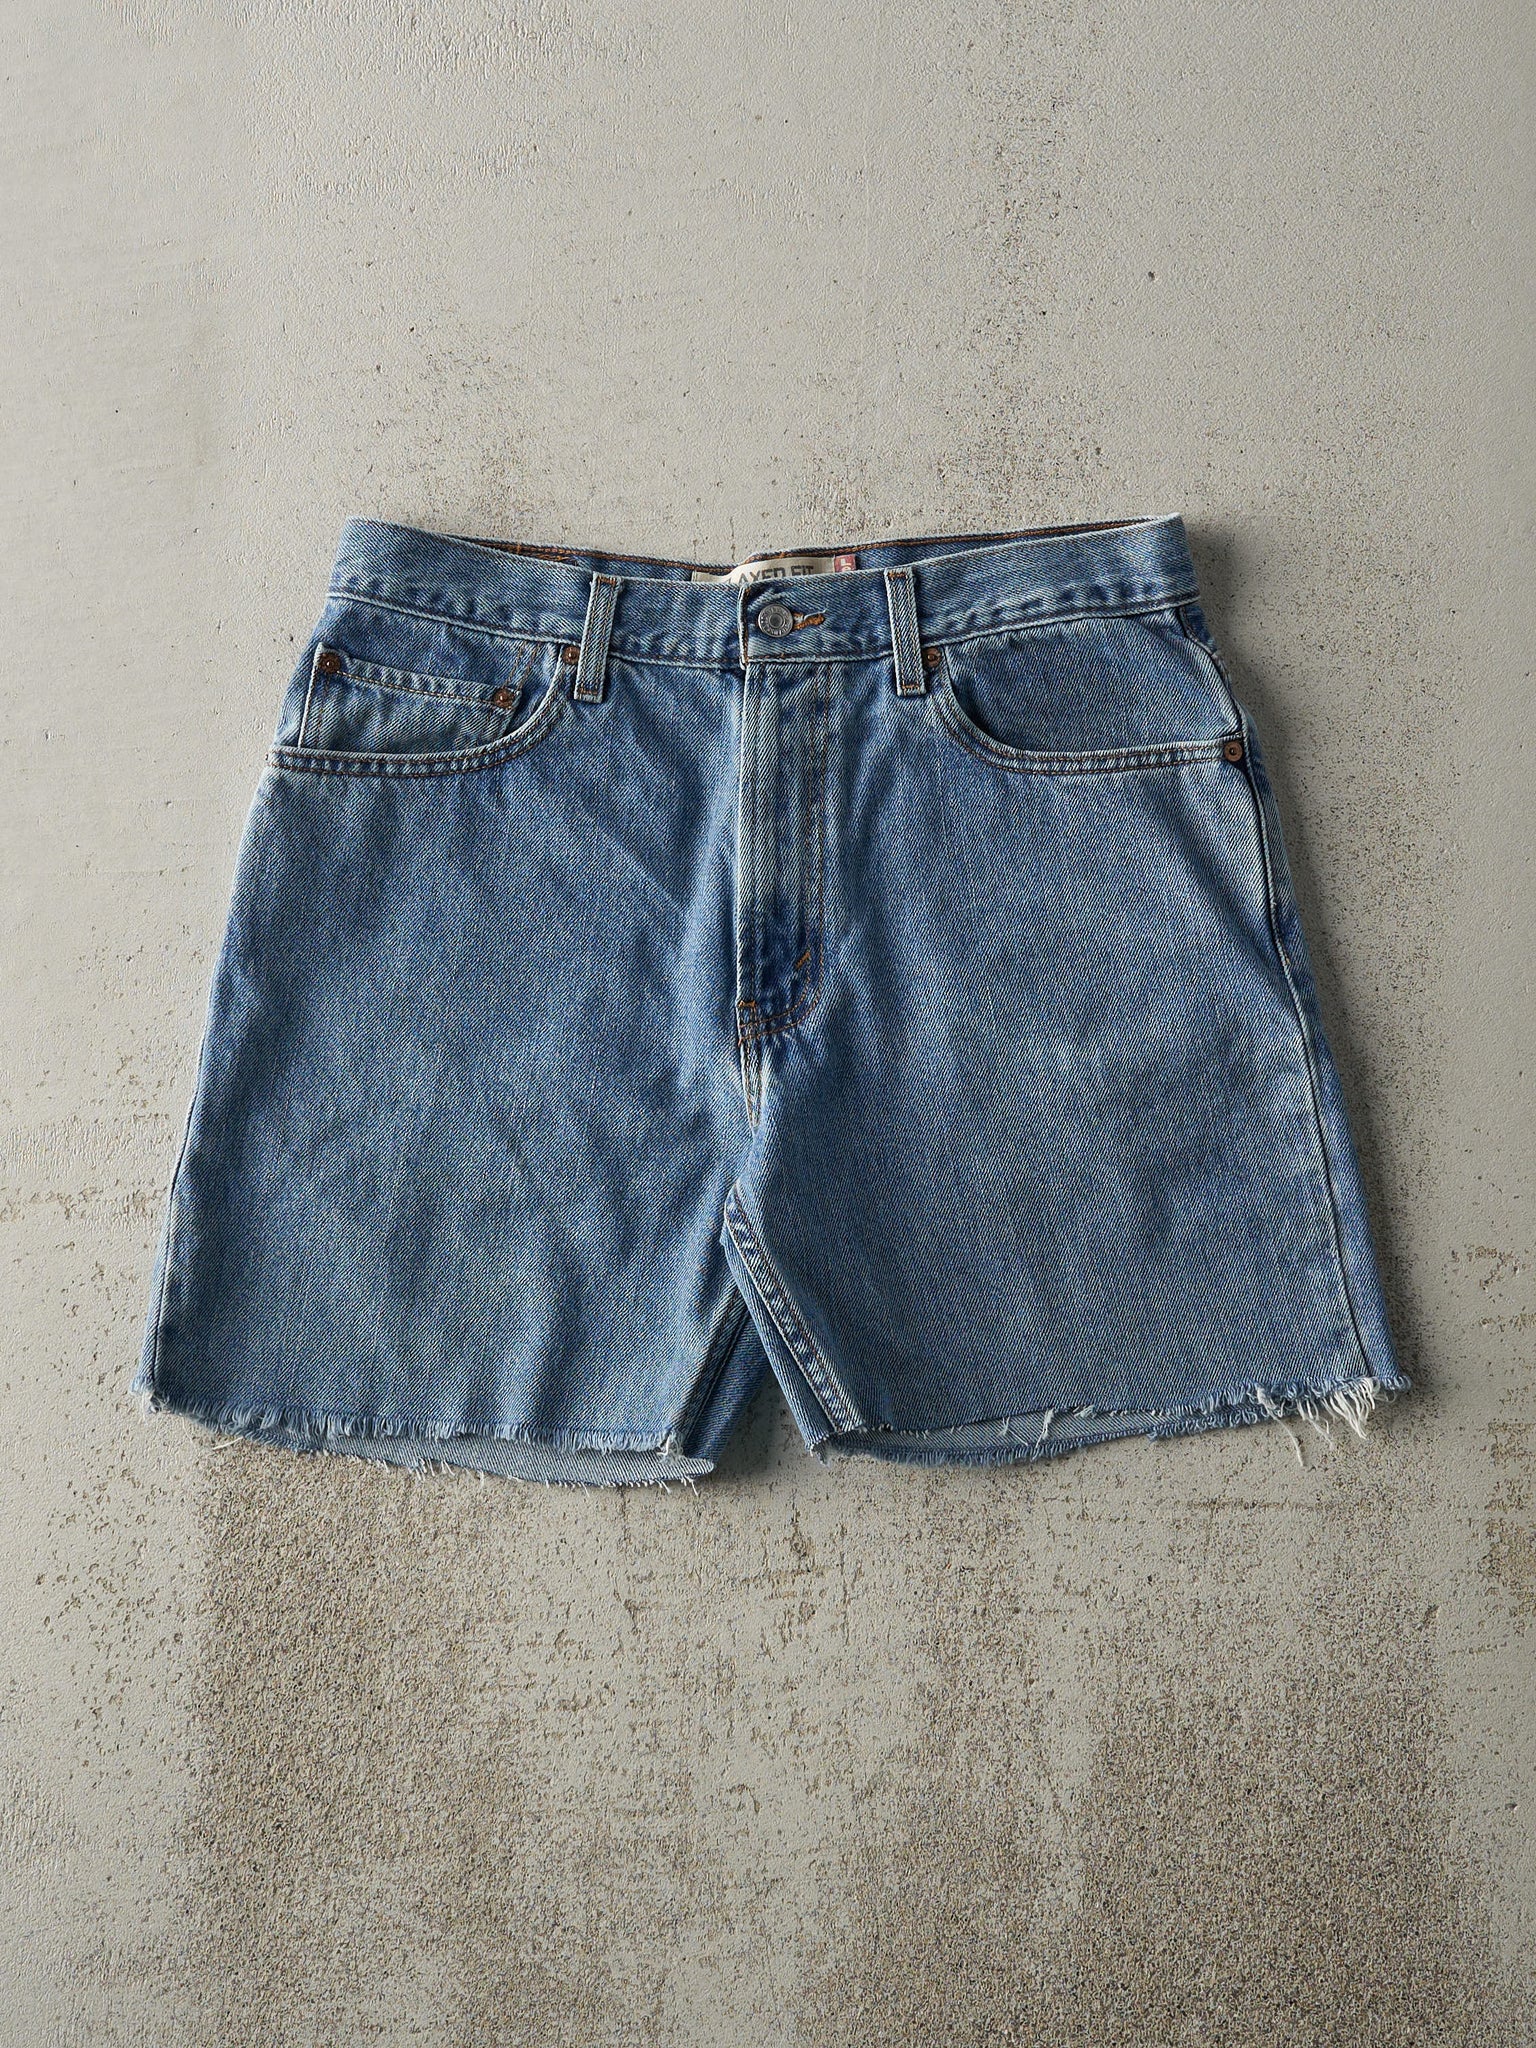 Vintage Y2K Light Wash Levi's 550 Cut Off Jean Shorts (33x6)